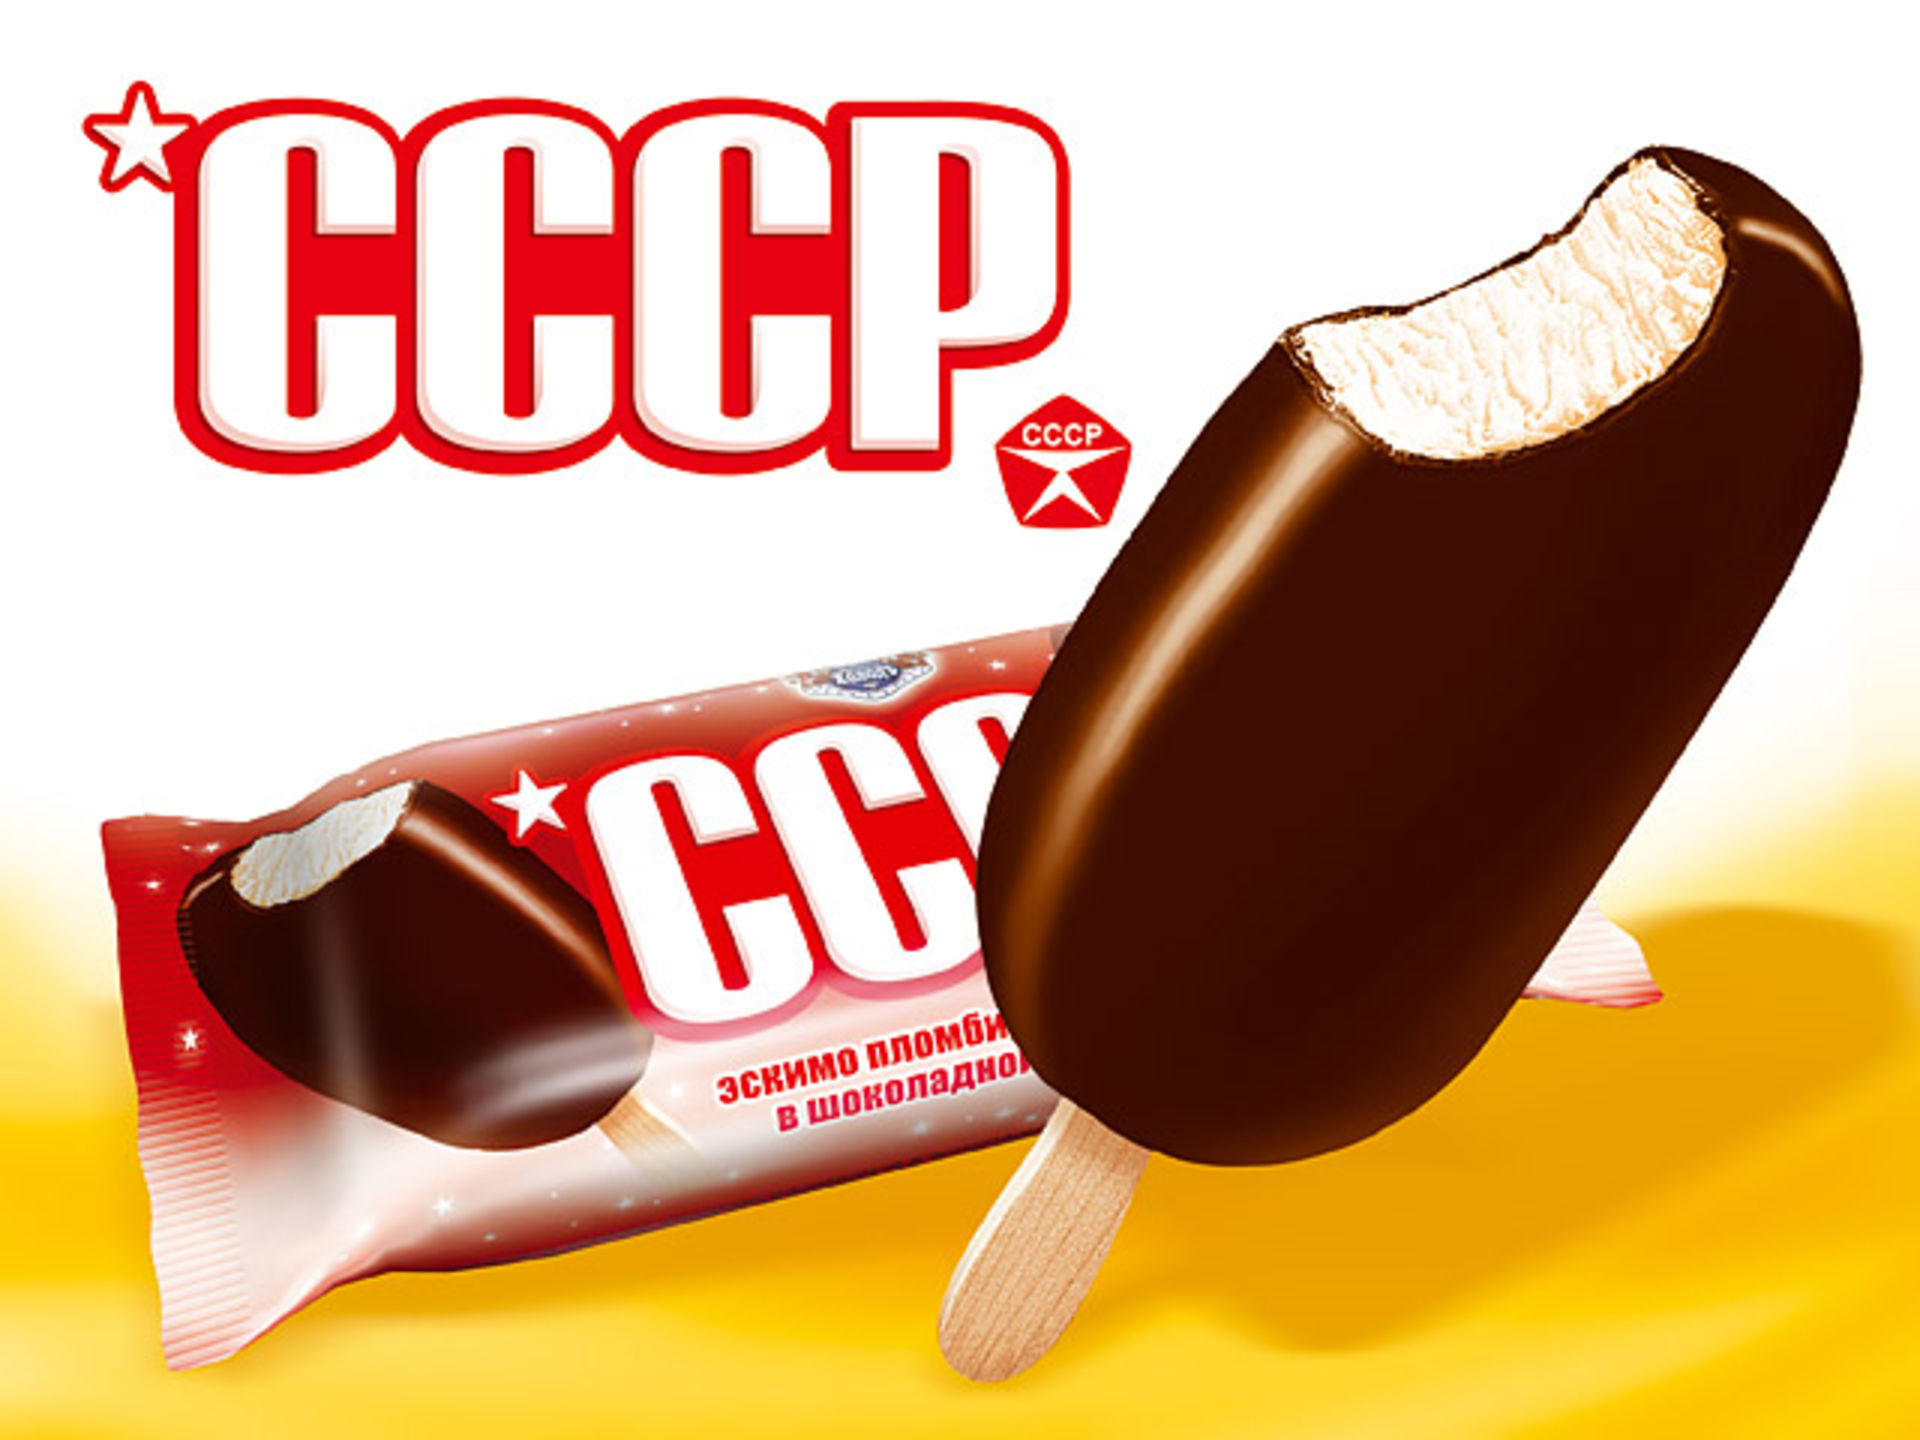 Мороженое эскимо СССР пломбир